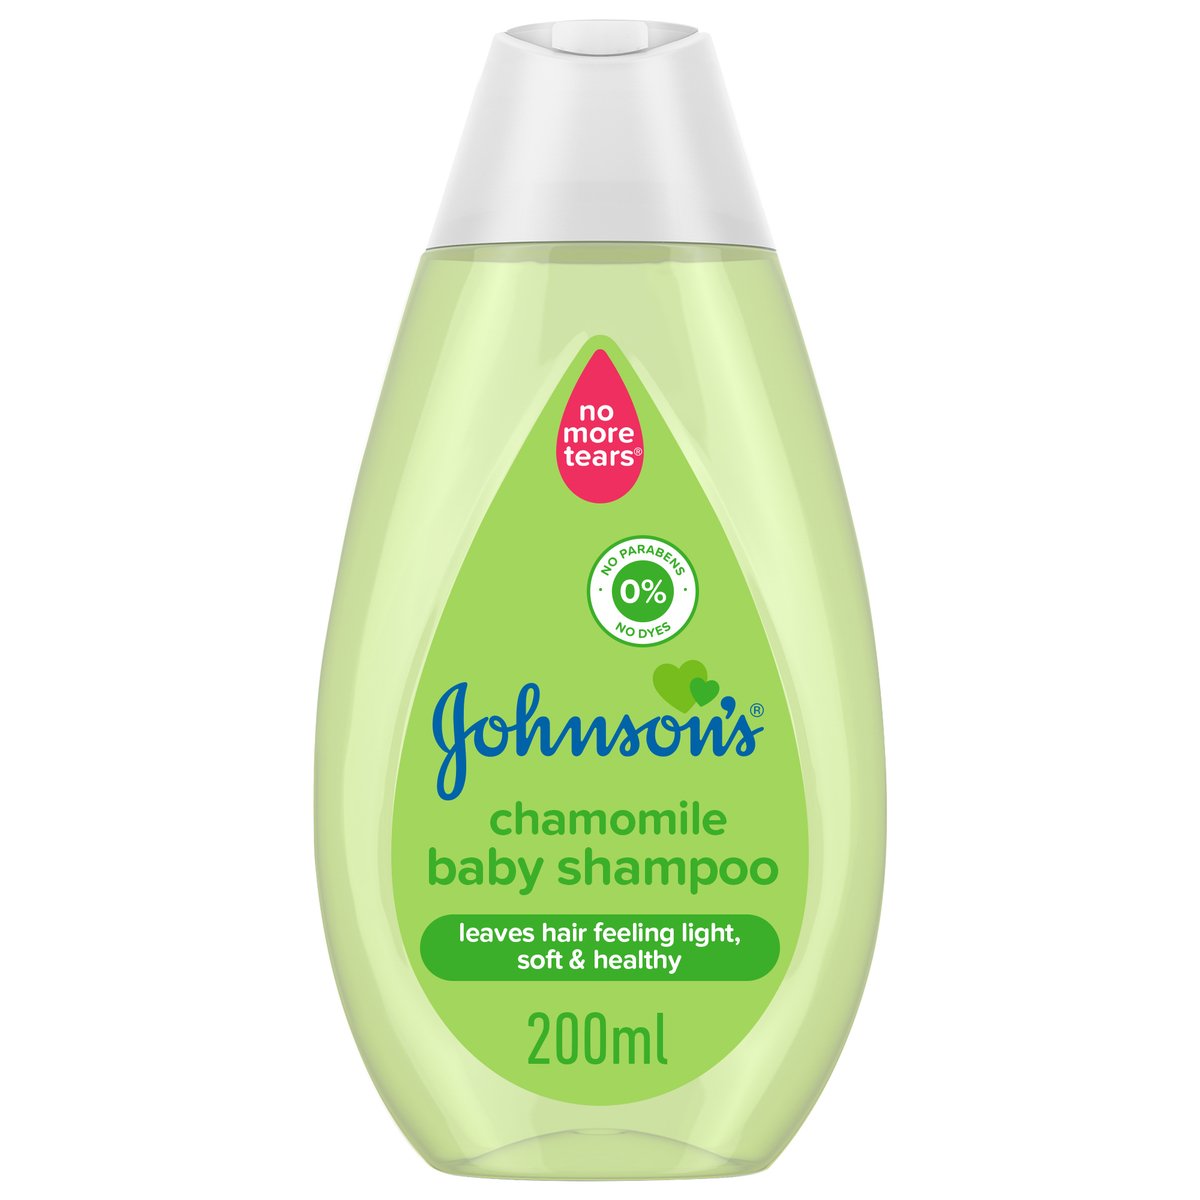 Johnson's Shampoo Chamomile Baby Shampoo 200 ml